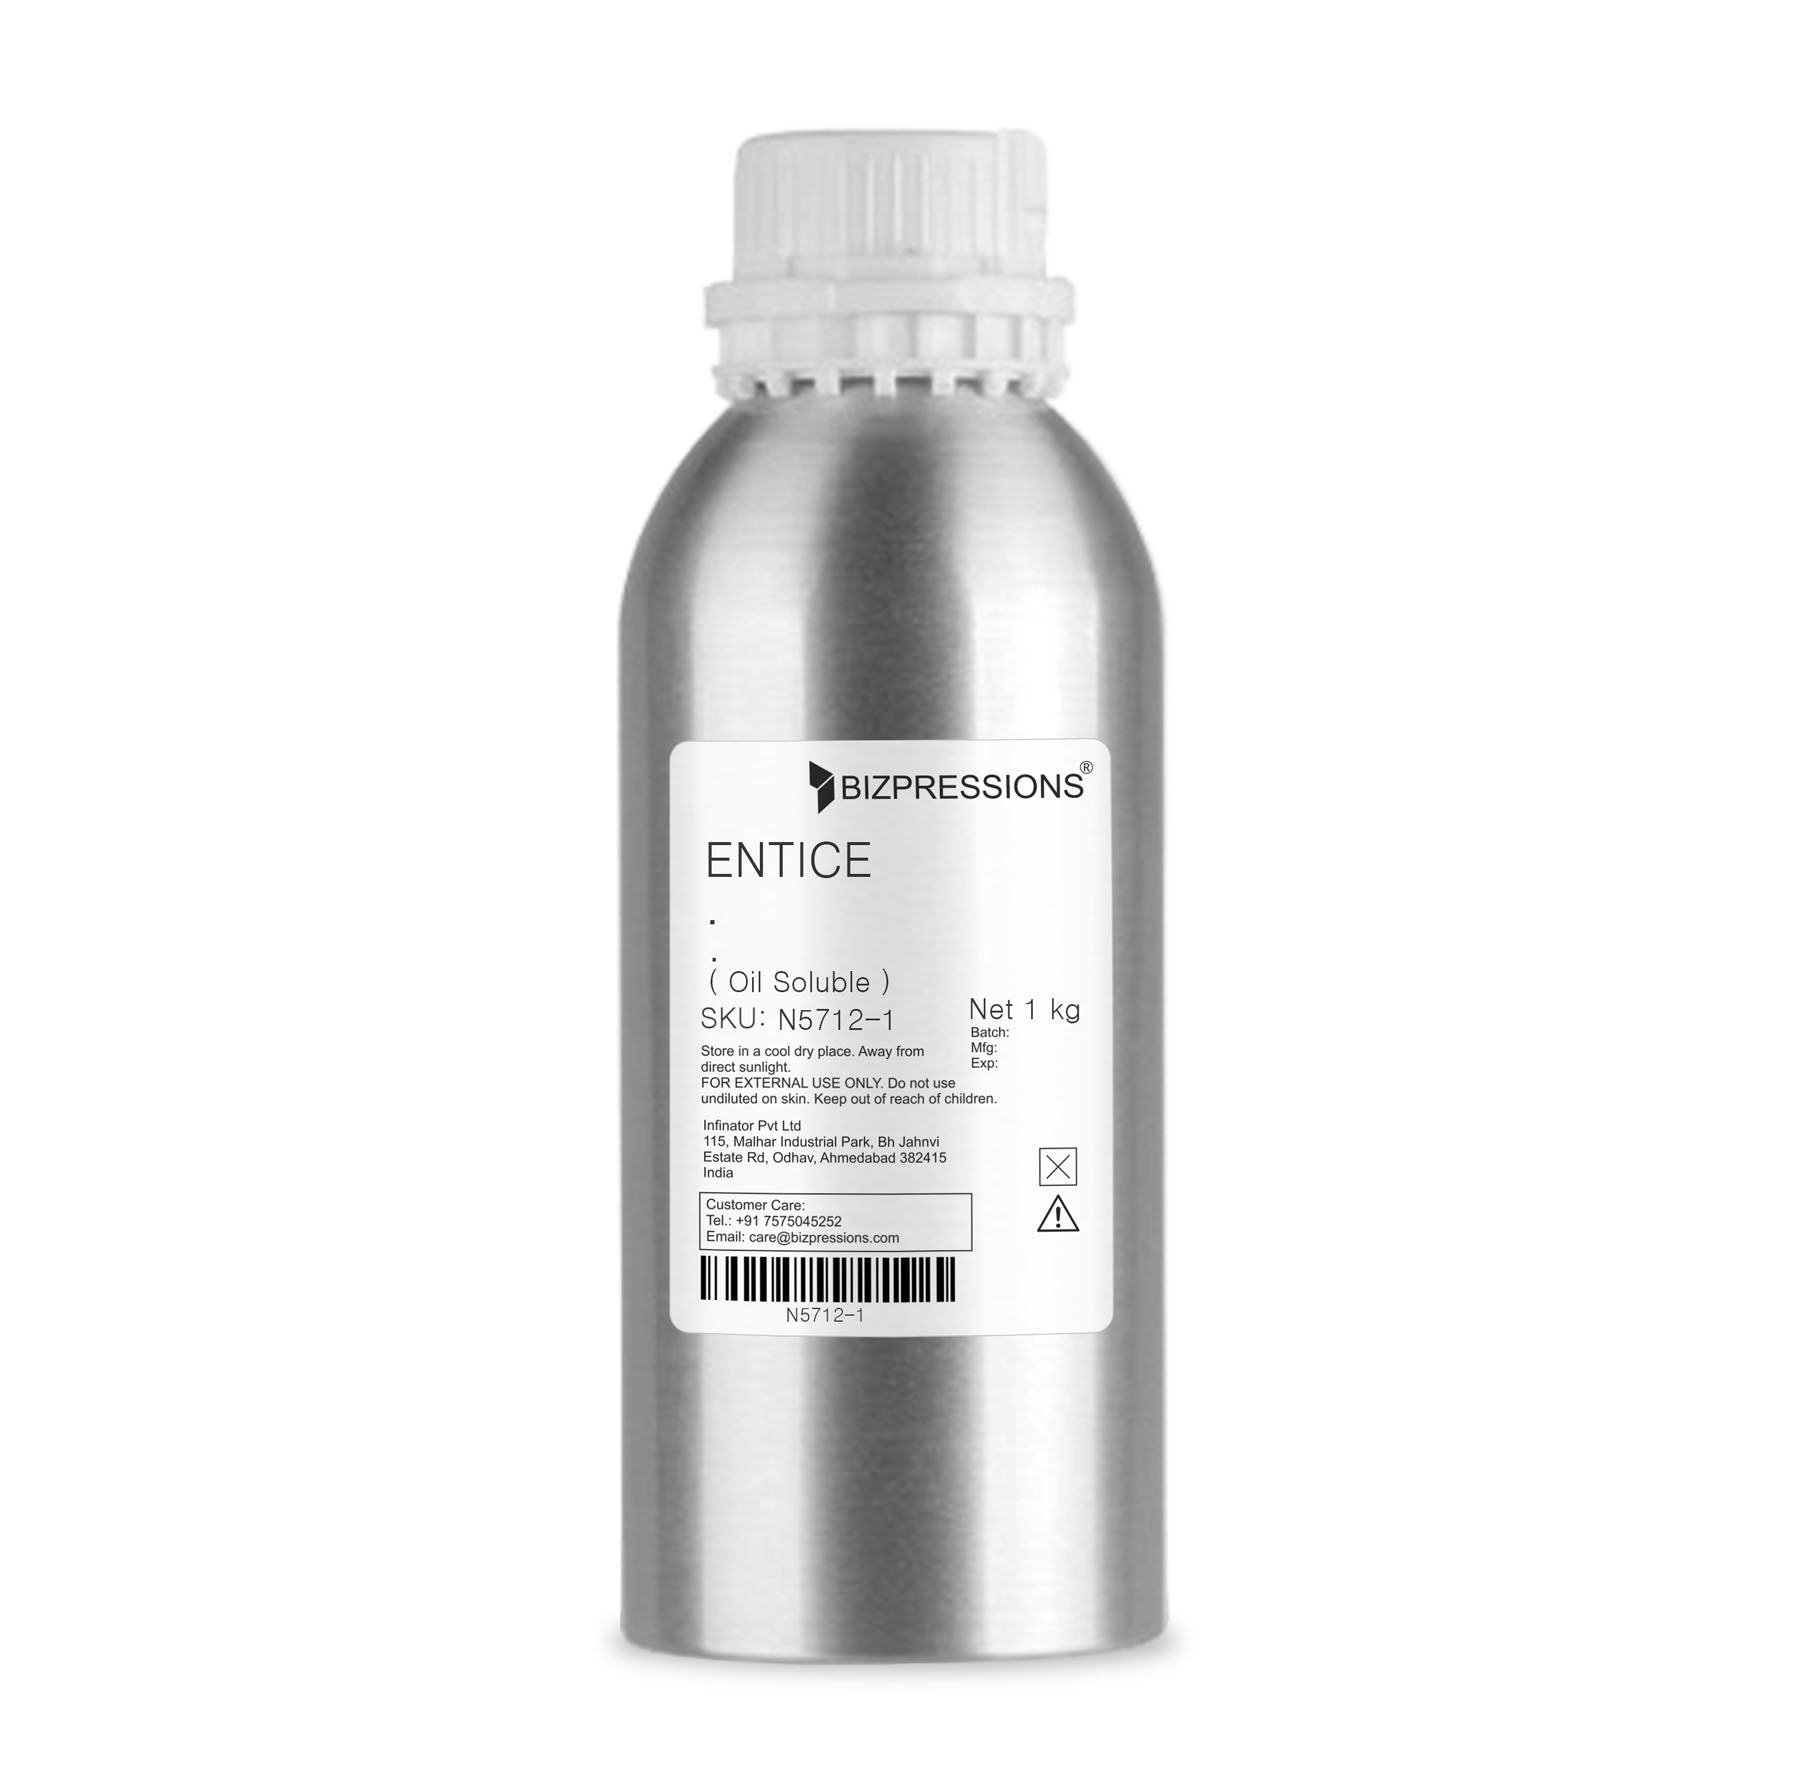 ENTICE - Fragrance ( Oil Soluble ) - 1 kg